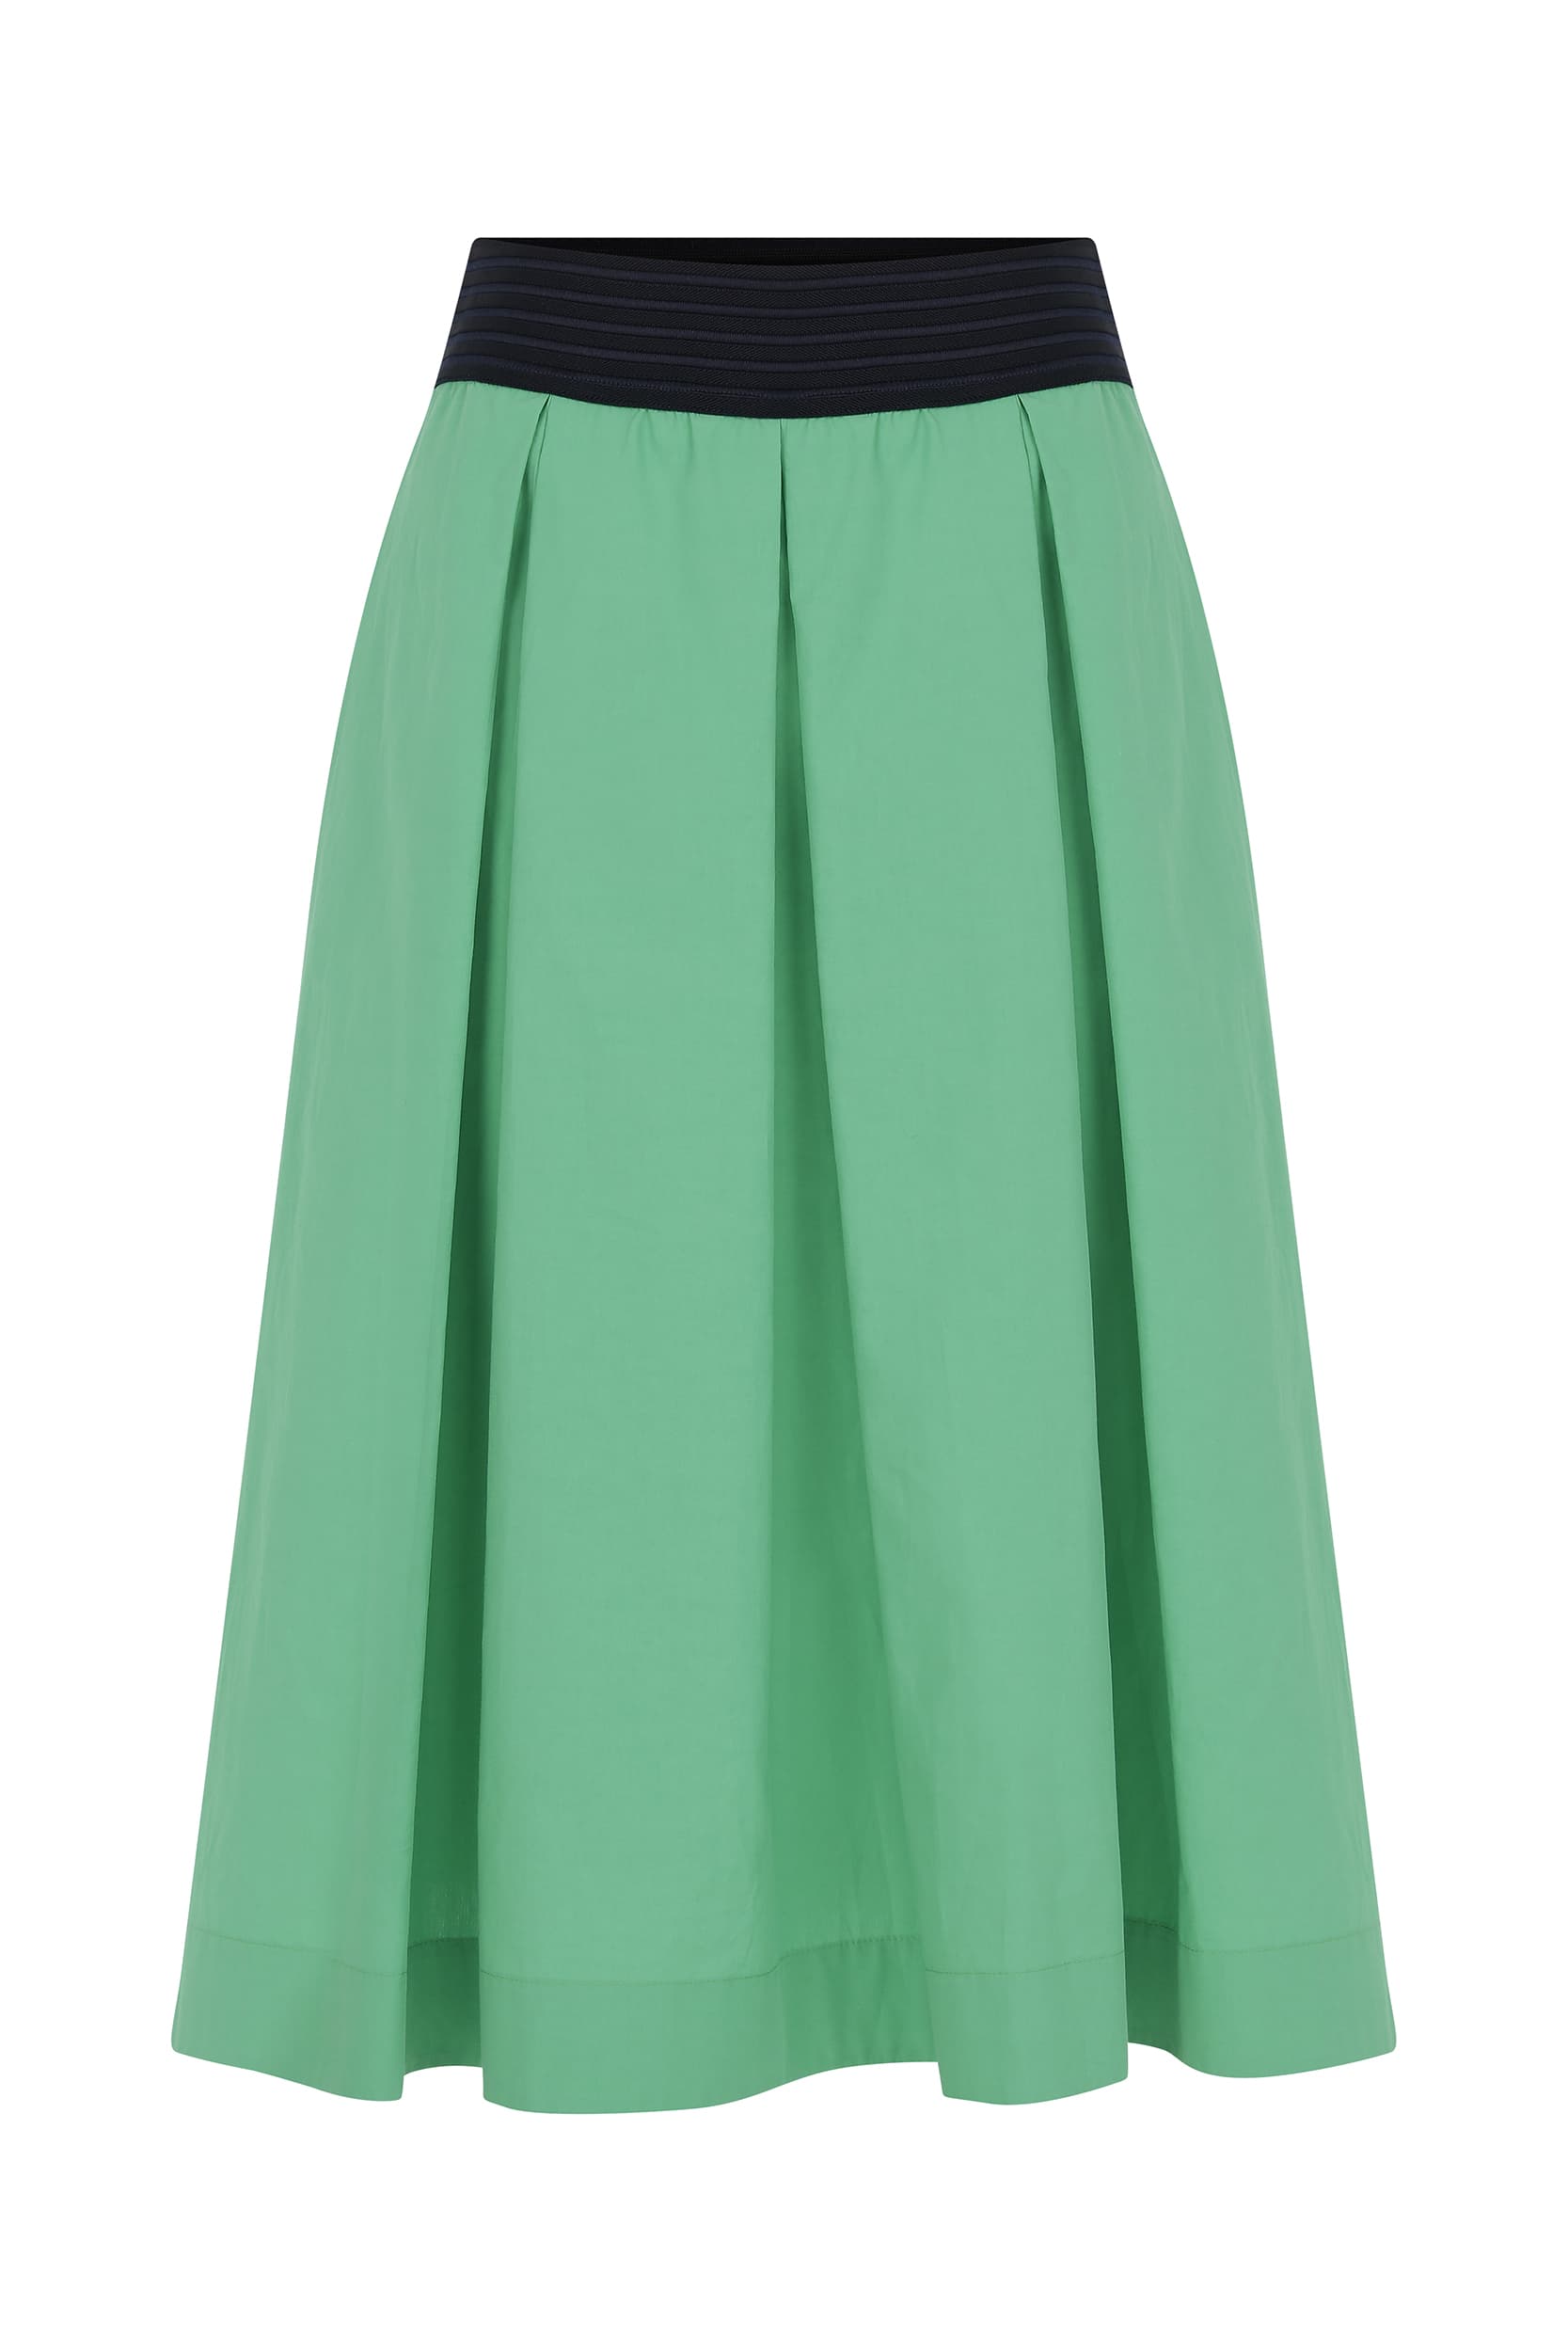 Elastic Waist Pleated Green Skirt -- [GREEN]